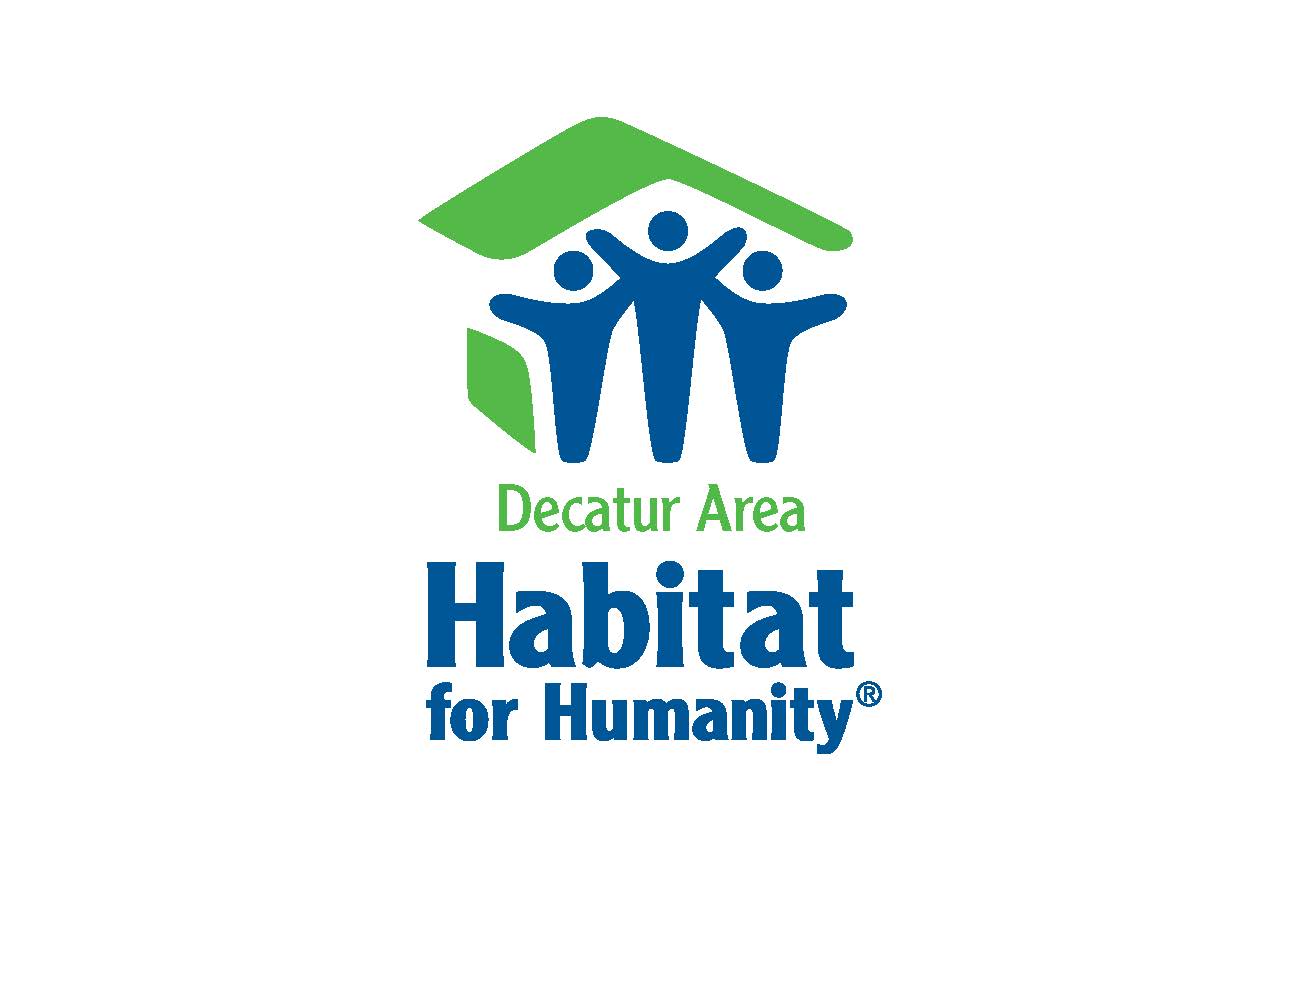 Decatur Area Habitat for Humanity logo